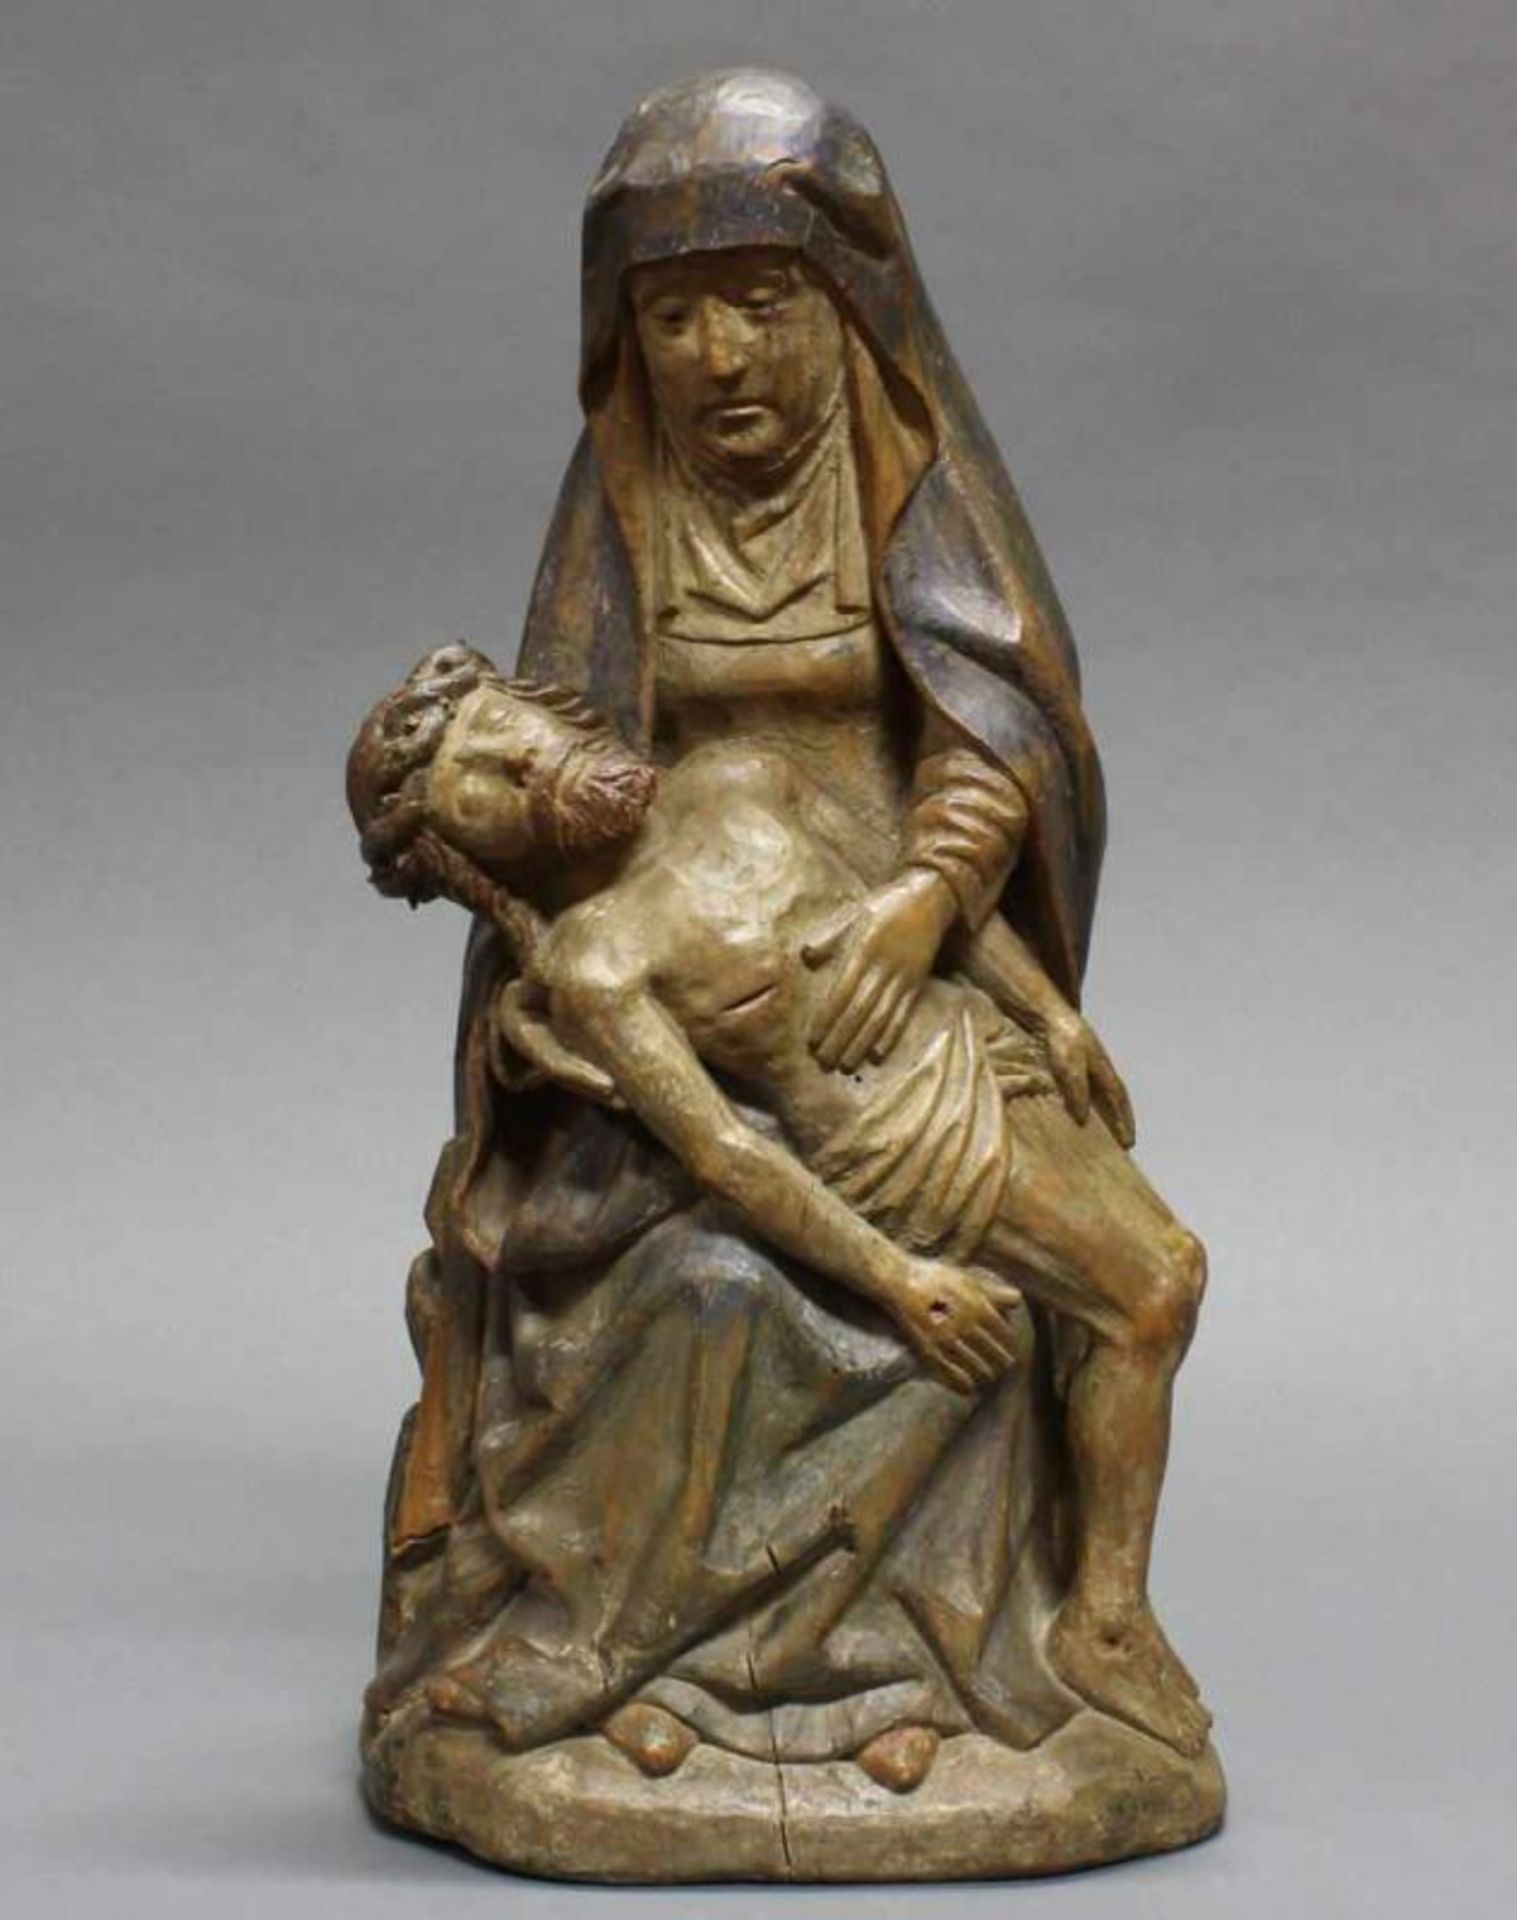 Skulptur, Holz geschnitzt, "Pietà", westfälisch, wohl Anfang 16. Jh., 34 cm, abgelaugt, Reste von